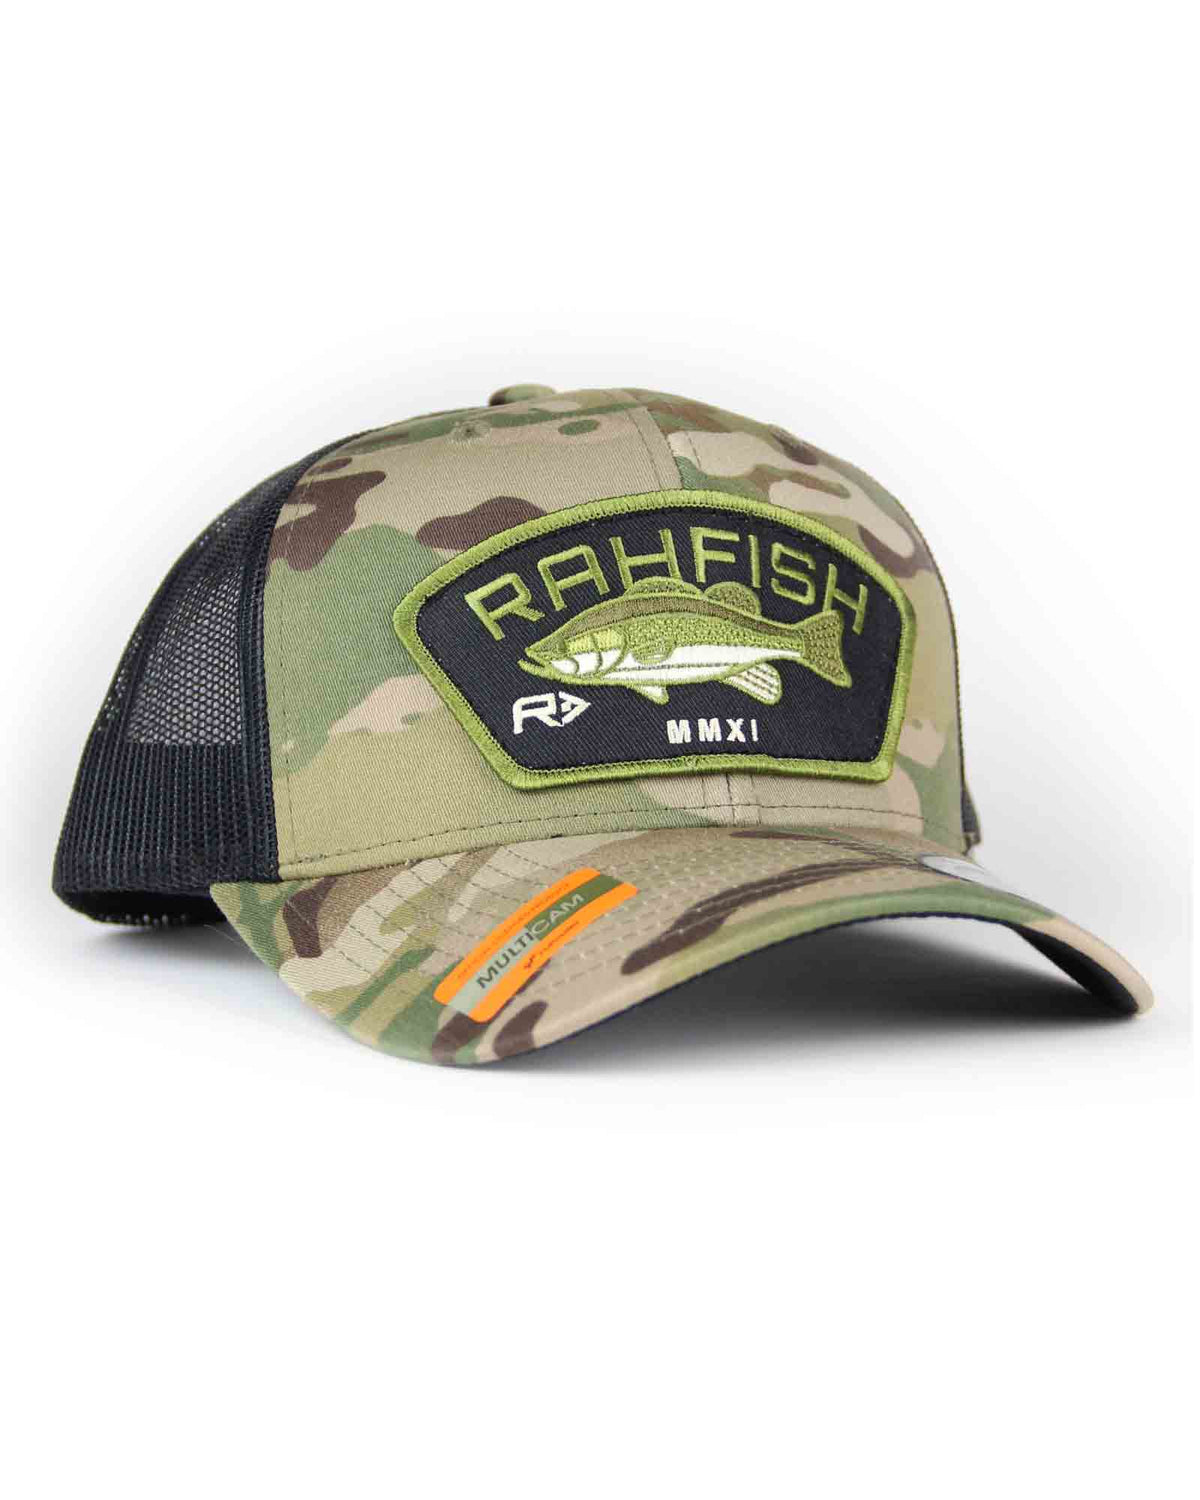 Rahfish LGB Trucker Hat - Camo